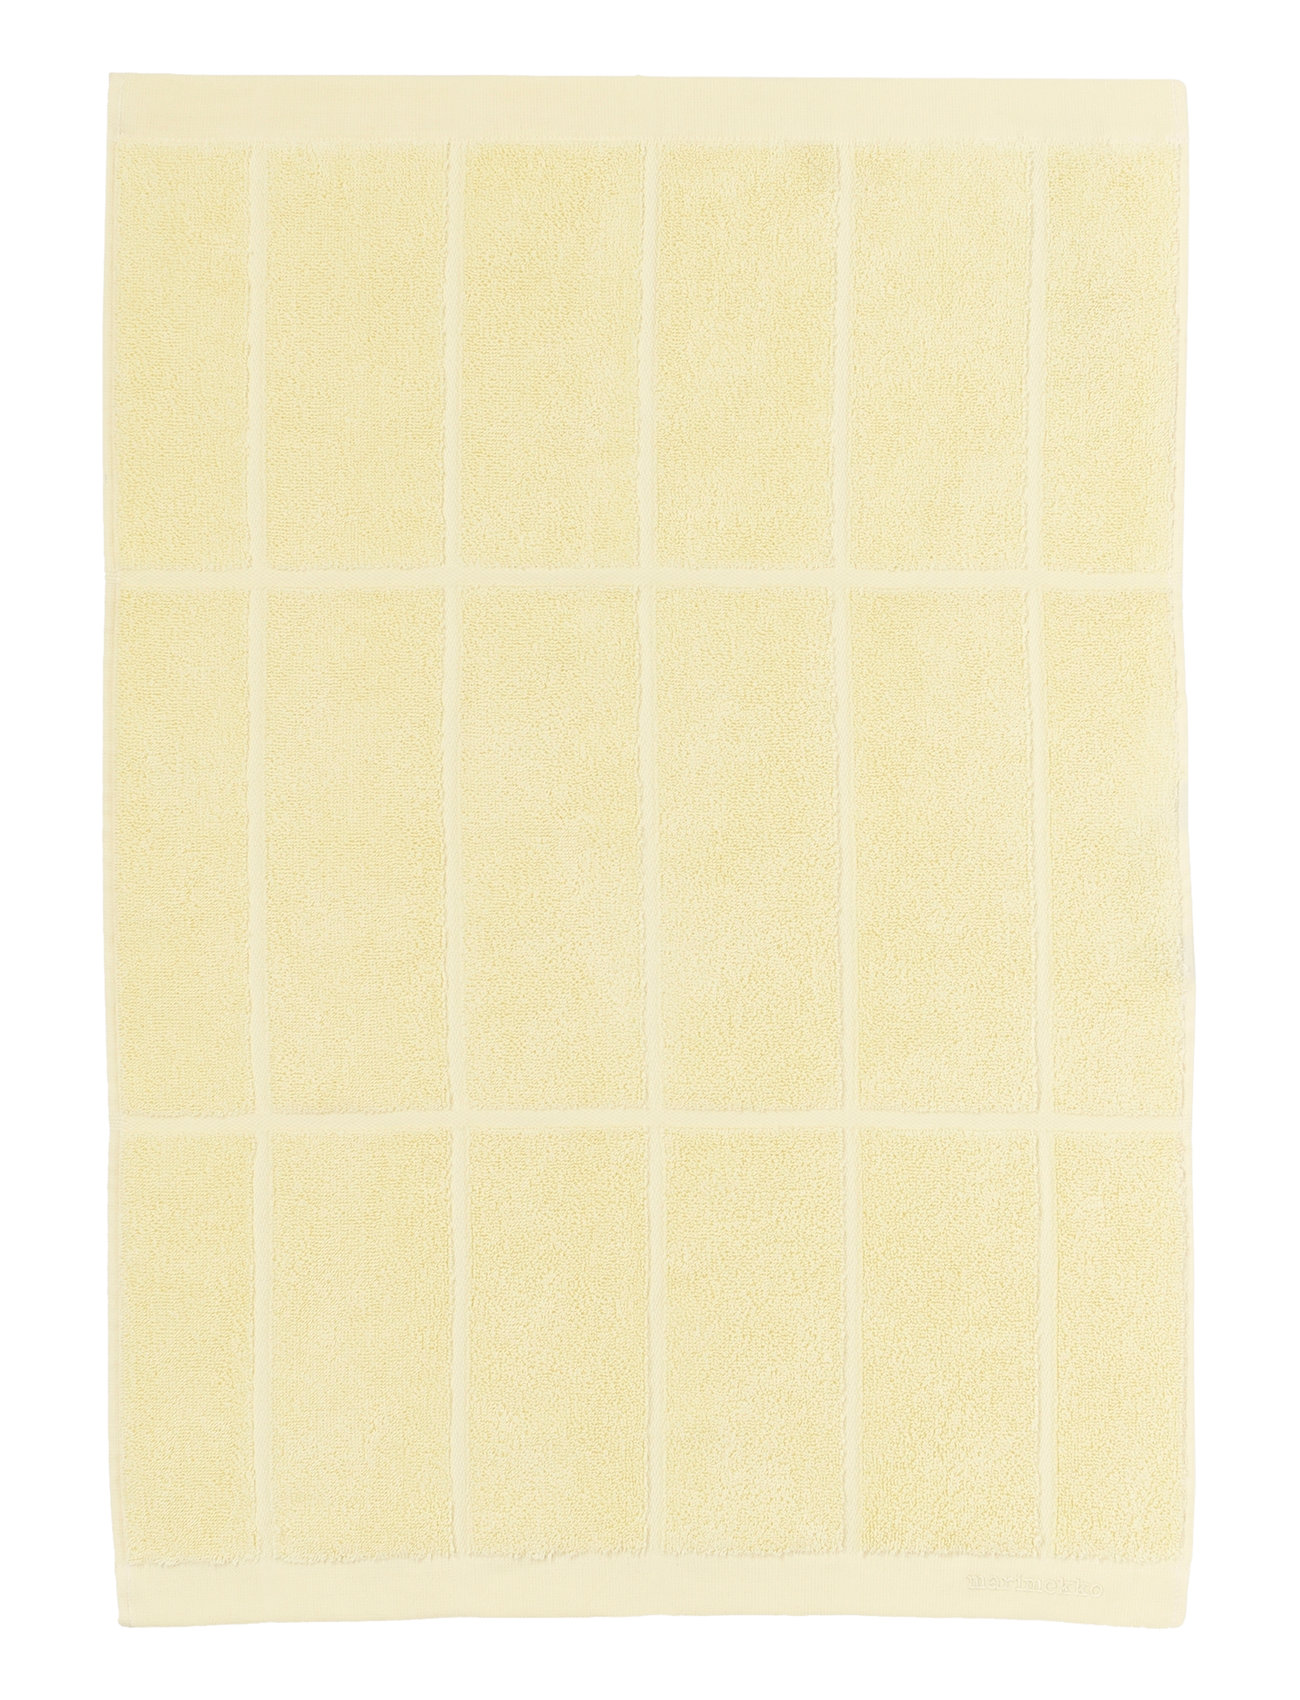 Tiiliskivi Hand Towel 50X70Cm Home Textiles Bathroom Textiles Towels & Bath Towels Hand Towels Yellow Marimekko Home